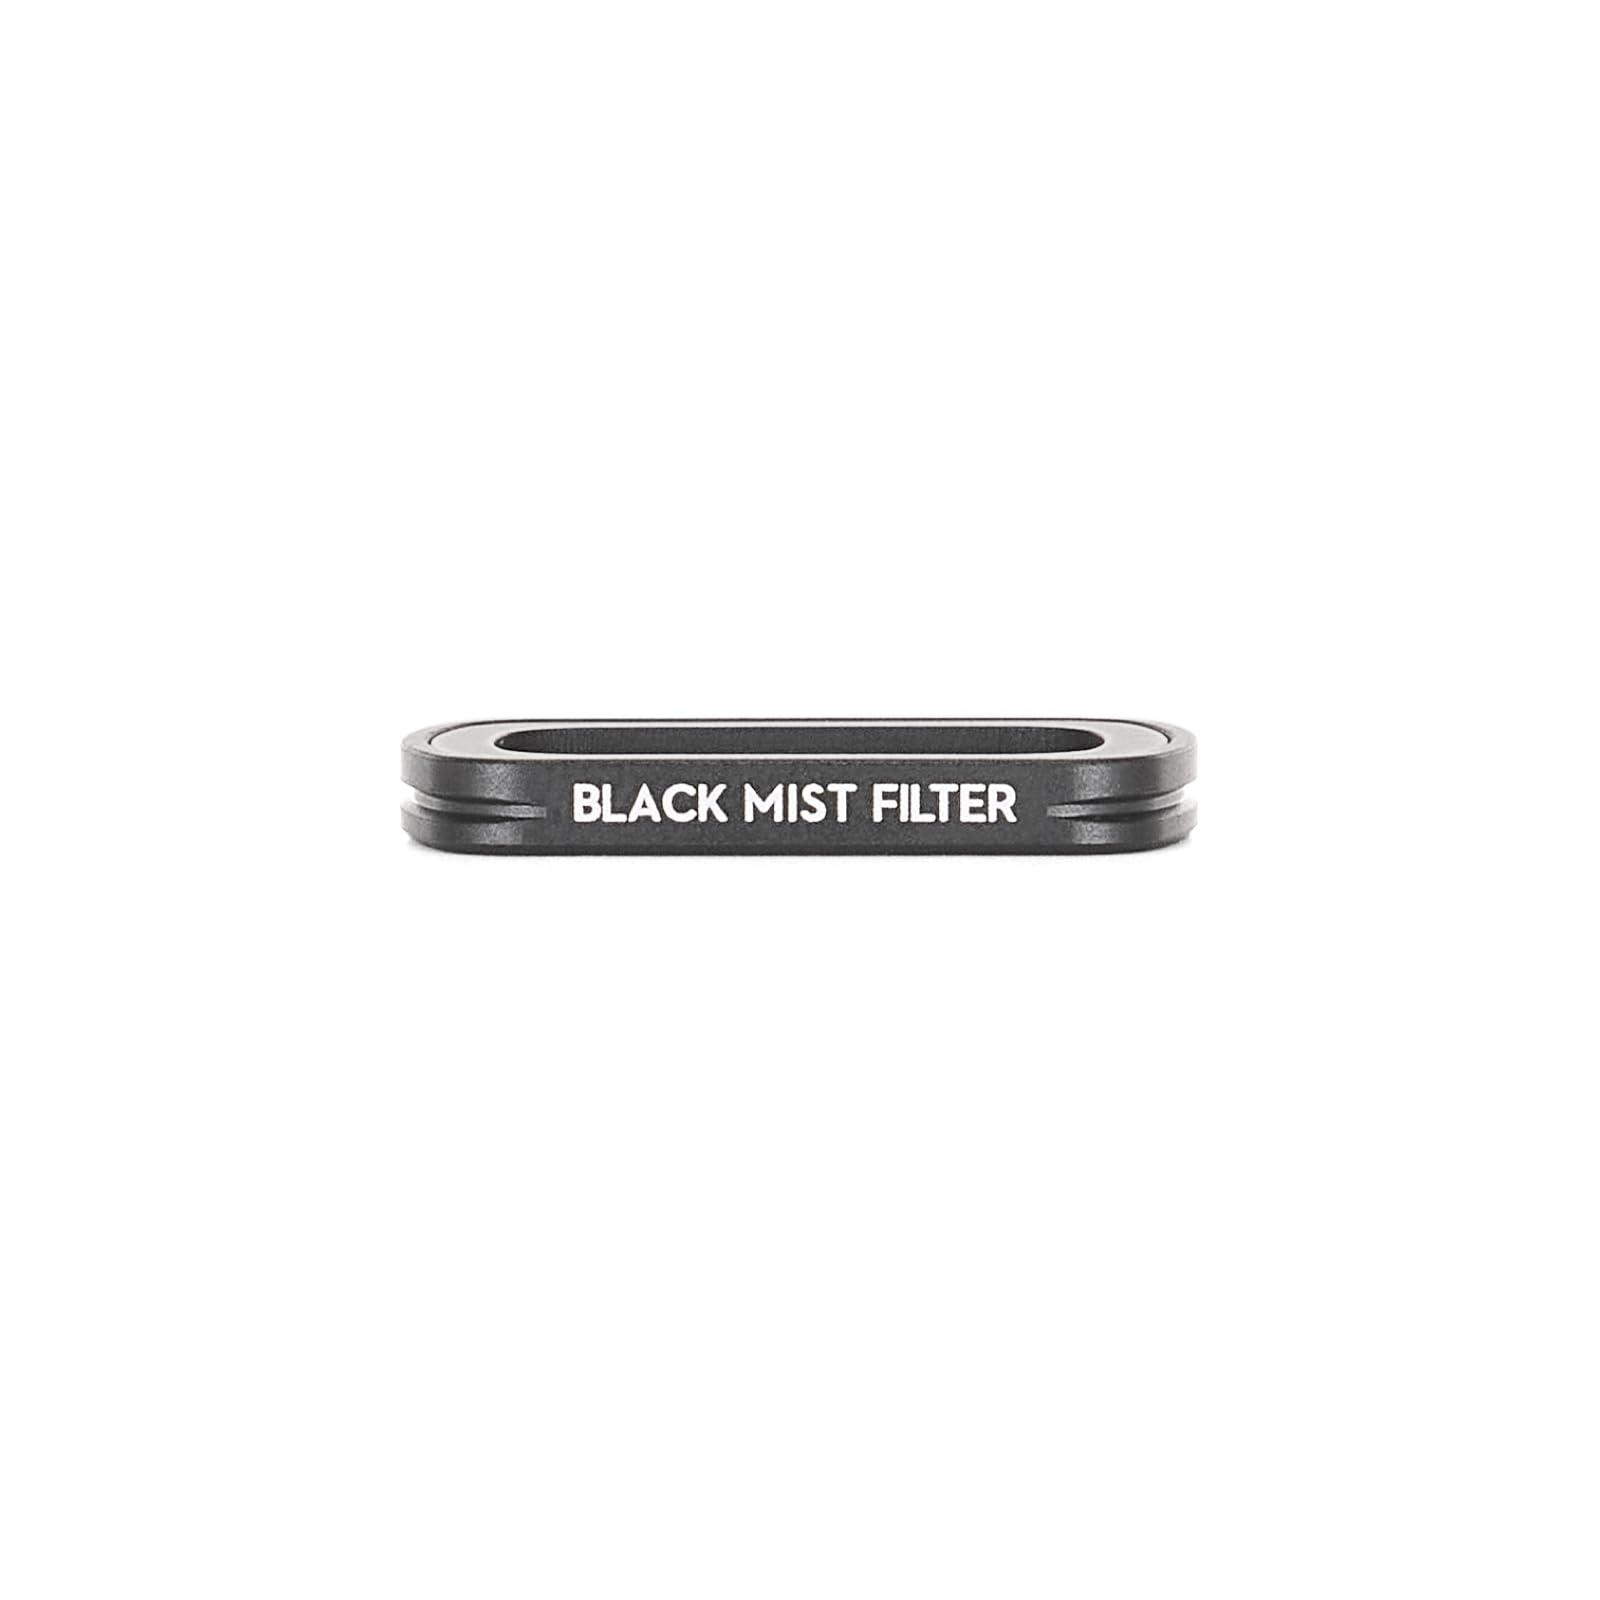 Osmo Pocket 3 Black Mist Filter, Compatibility: Osmo Pocket 3